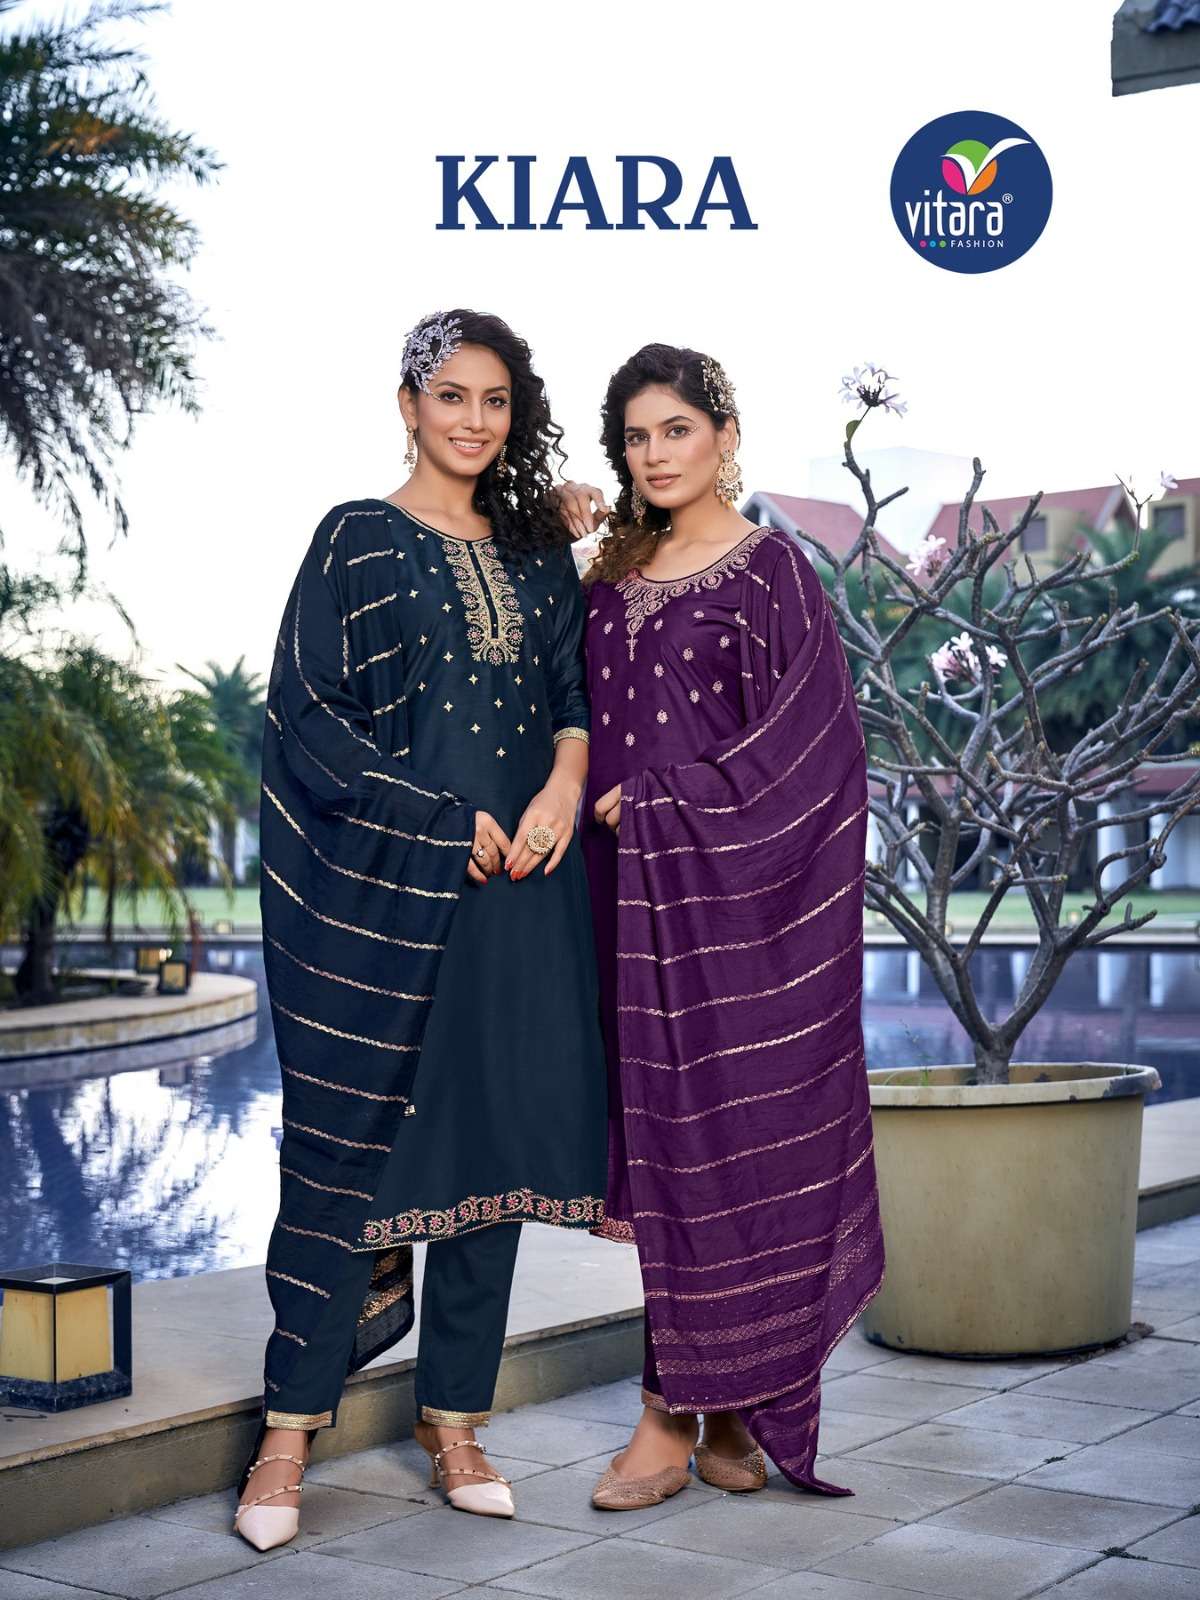 vitara fashion launches kiara exclusive designer kurti pent with dupatta latest salwar kameez